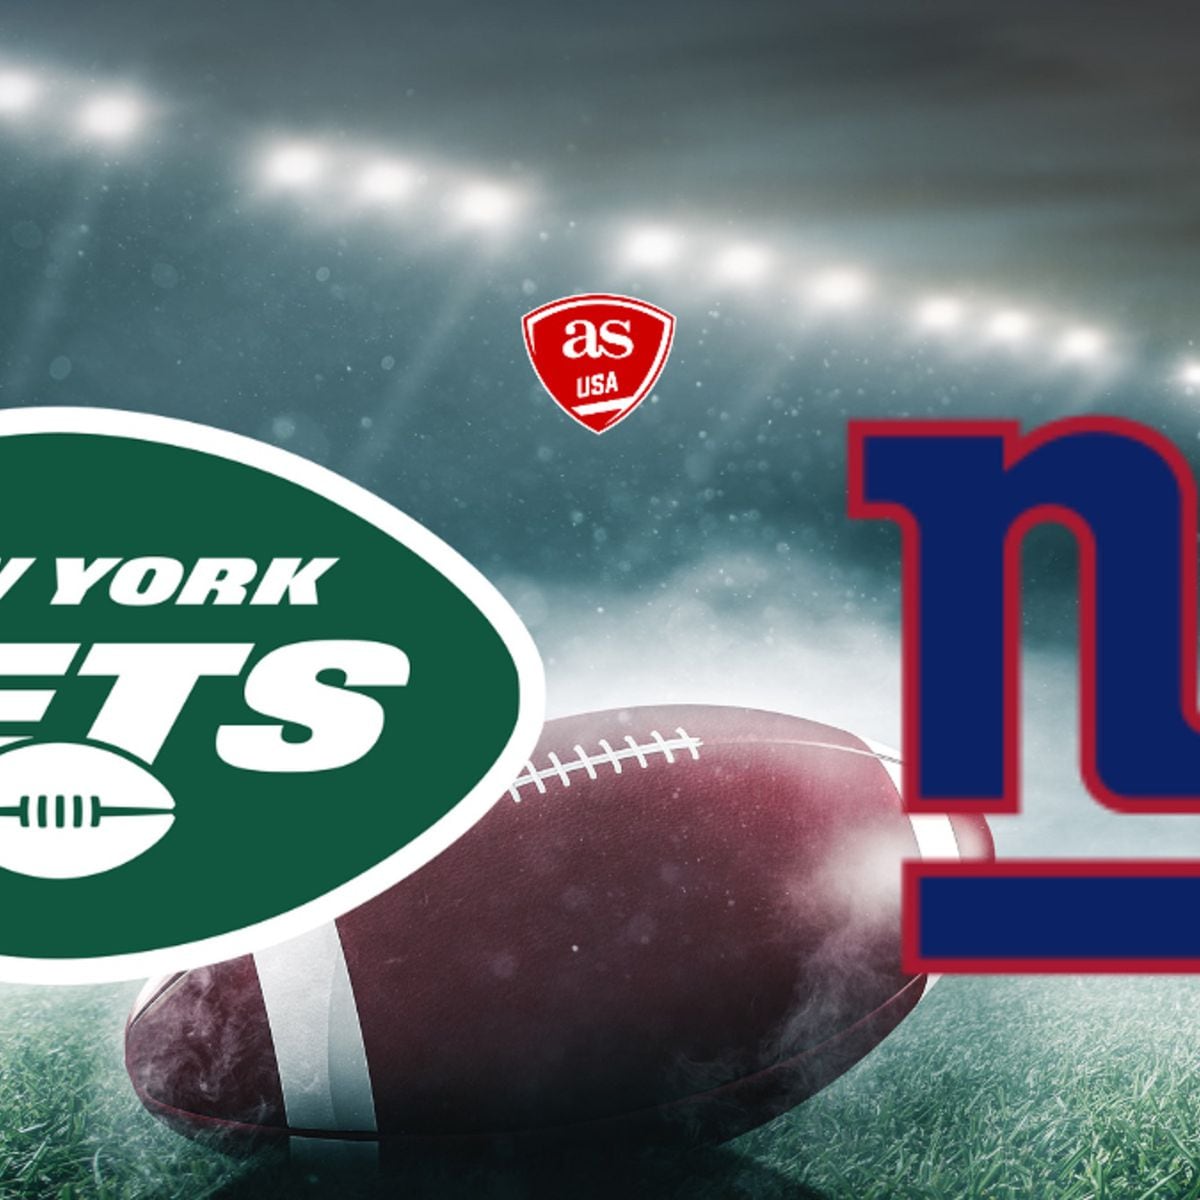 New York Jets vs. New York Giants  Preseason Week 1 2021 NFL Game  Highlights 